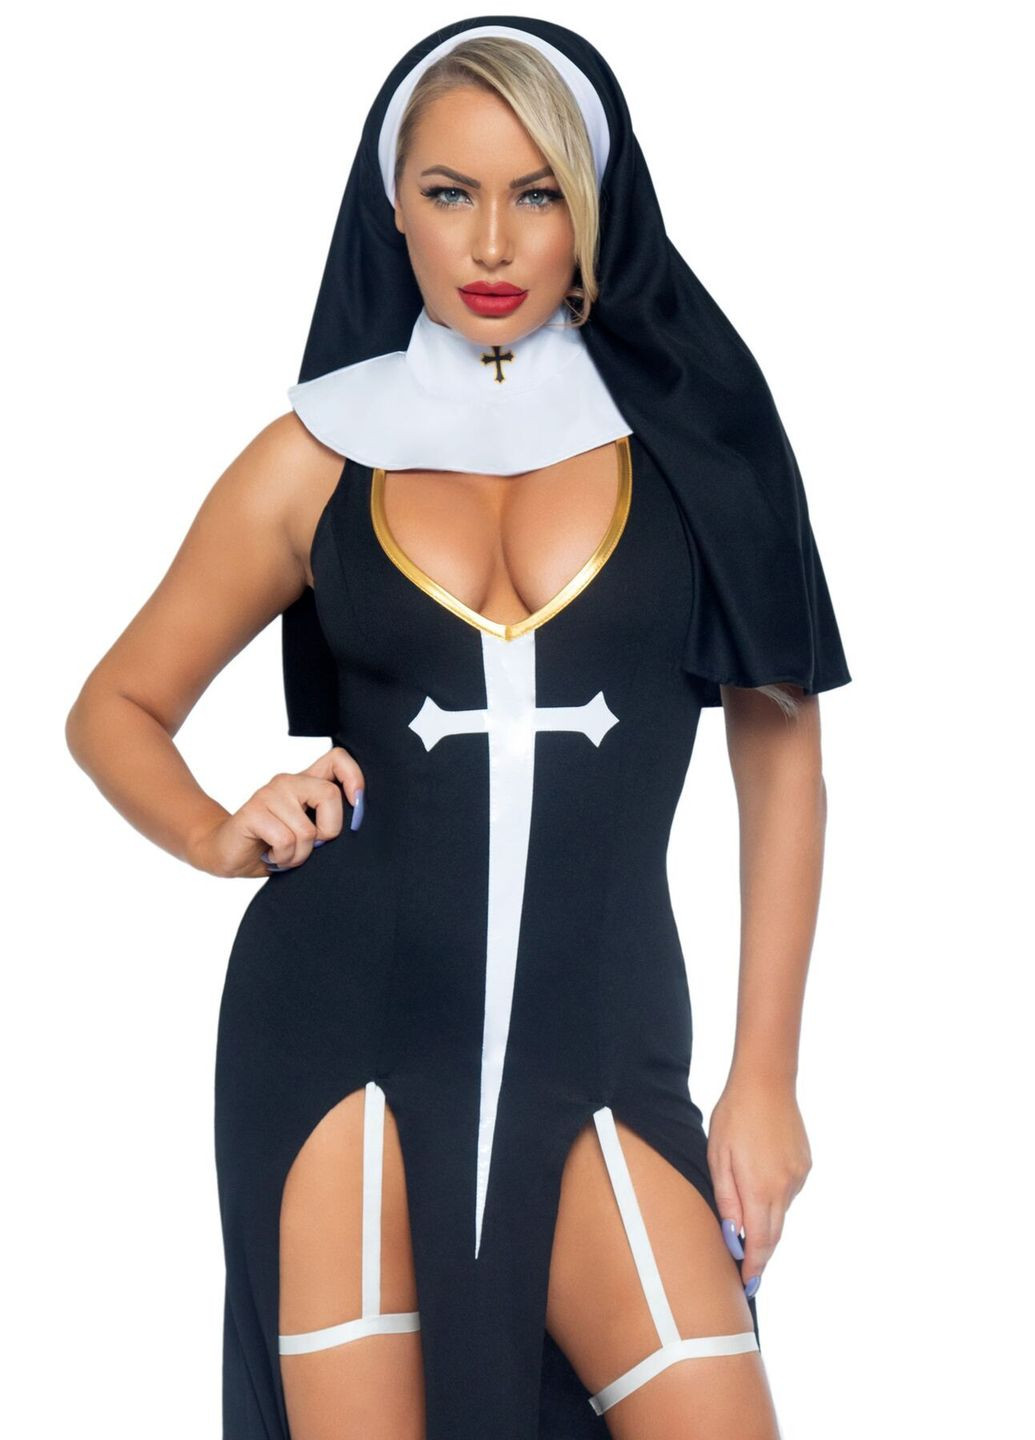 Костюм монашки-грешницы Sultry Sinner, платье, головной убор, воротник - CherryLove Leg Avenue (282966049)